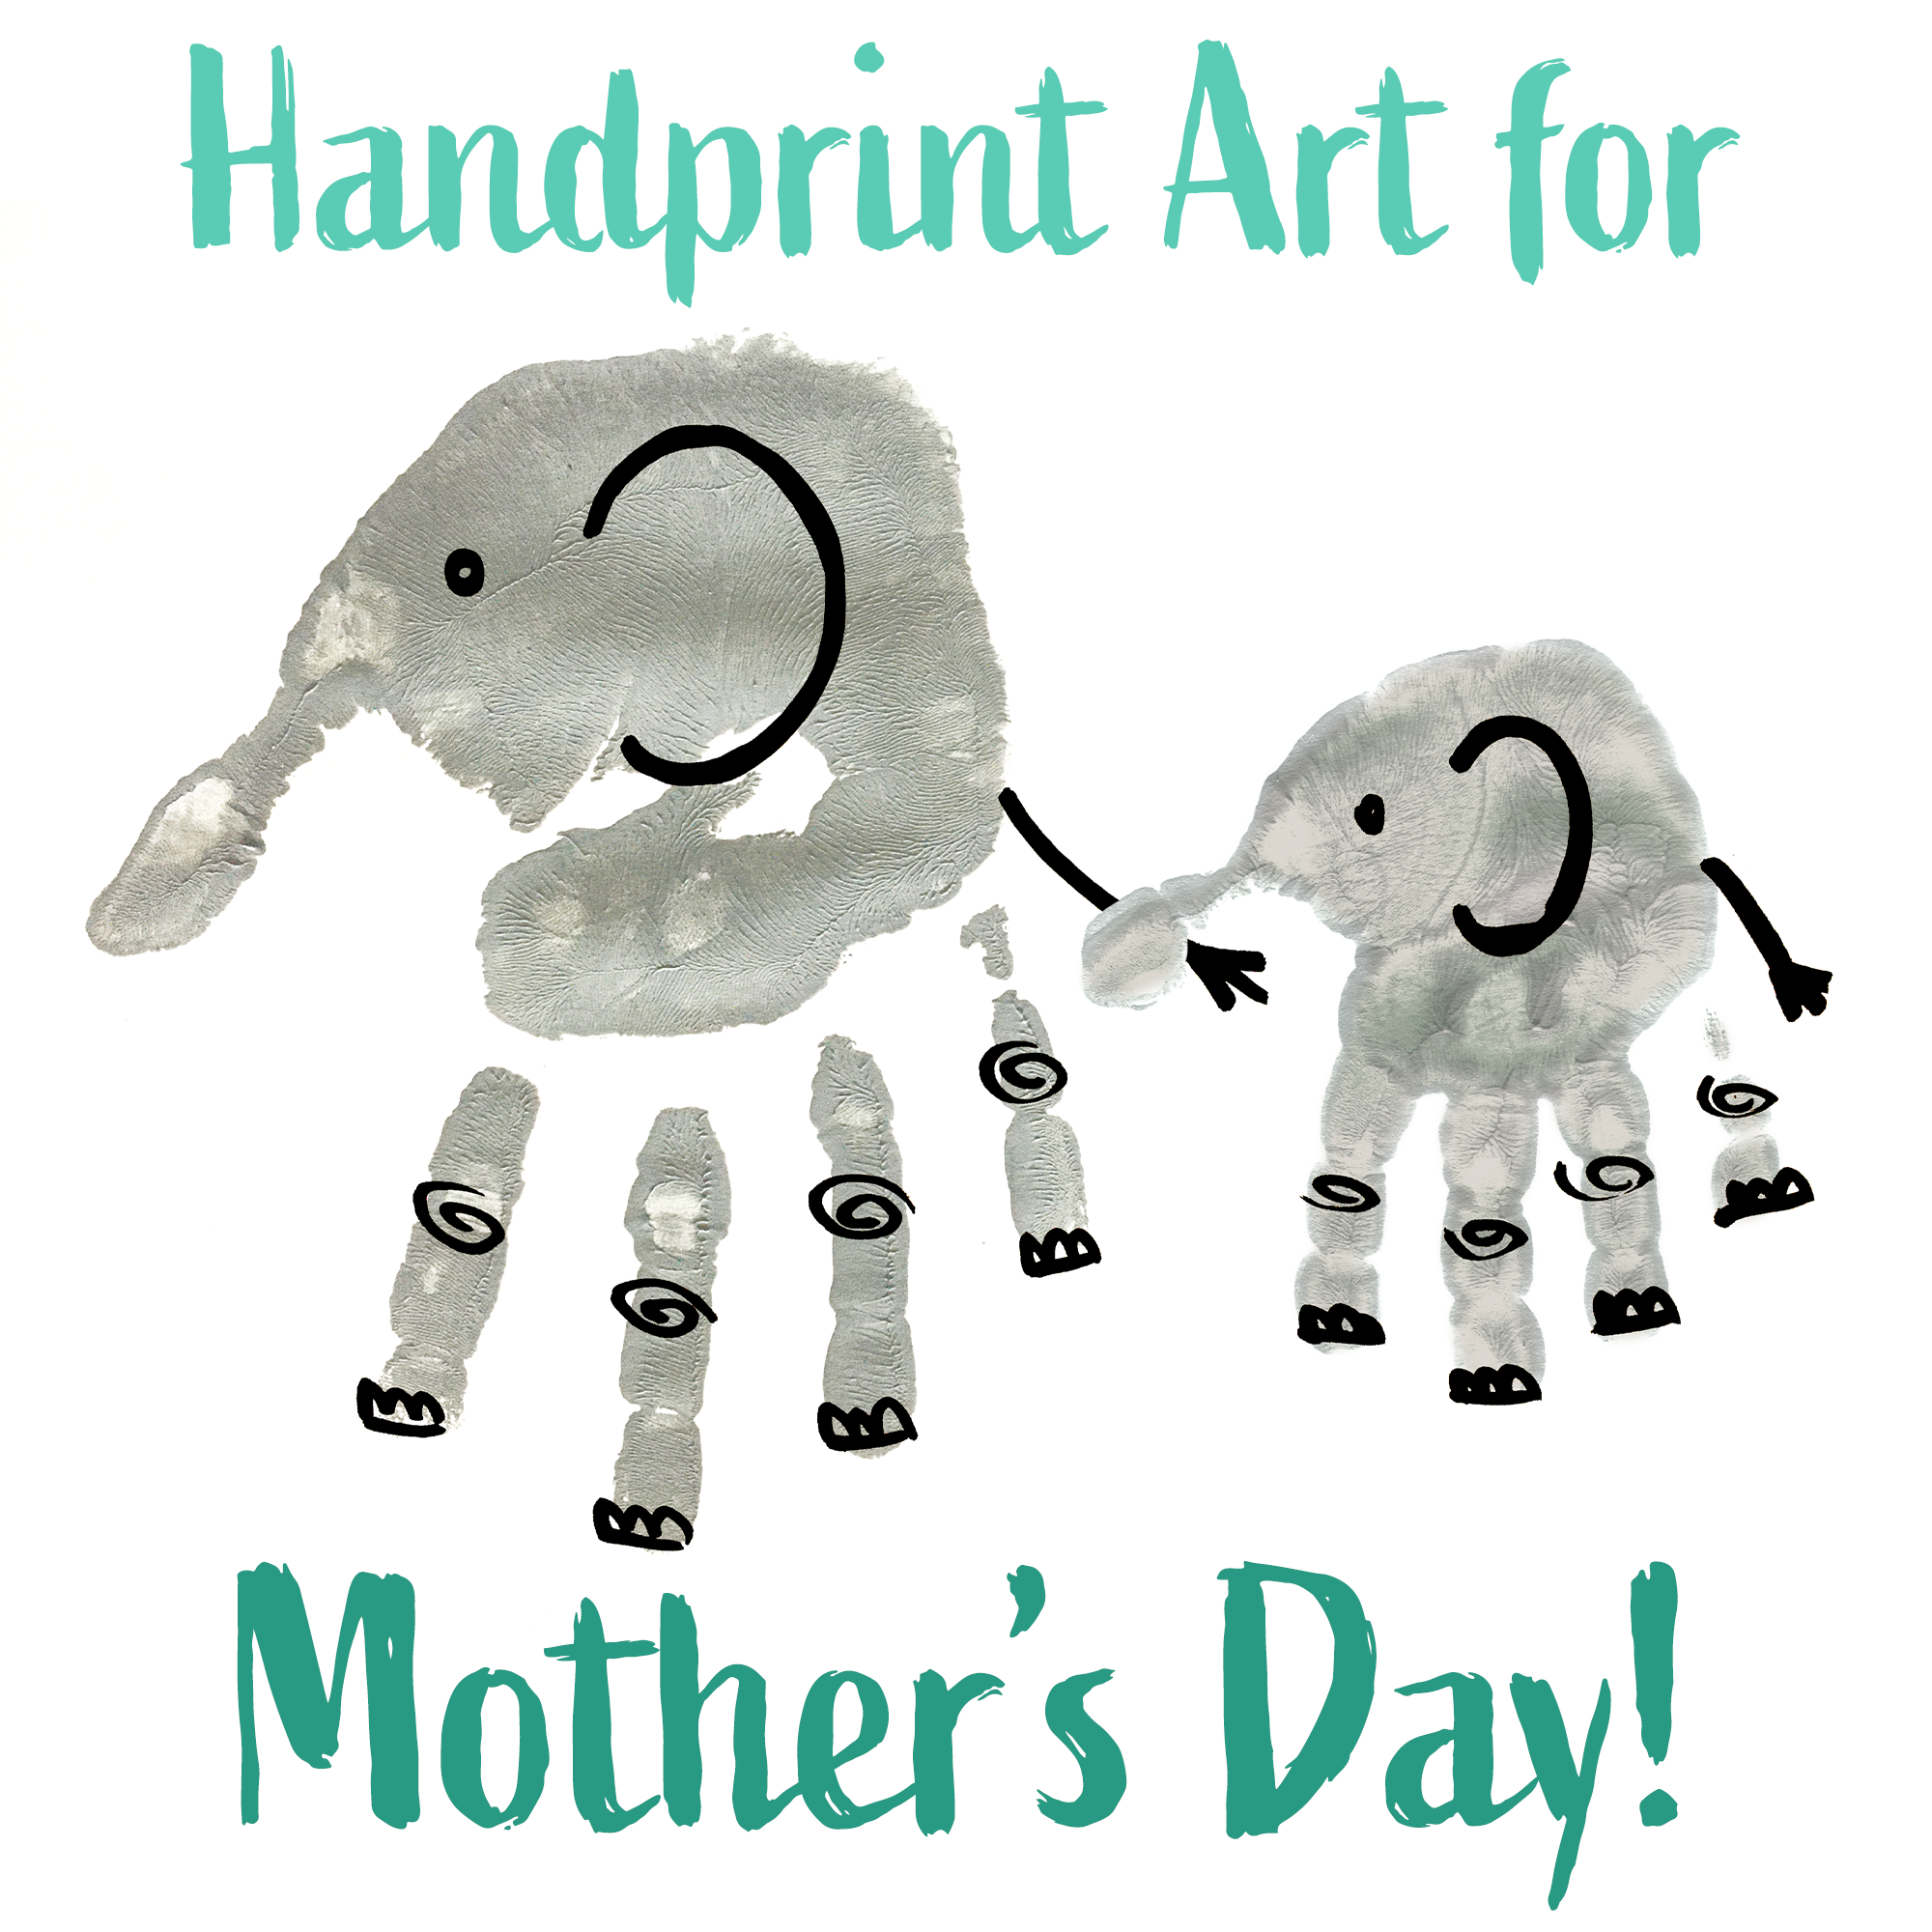 handprint art animals